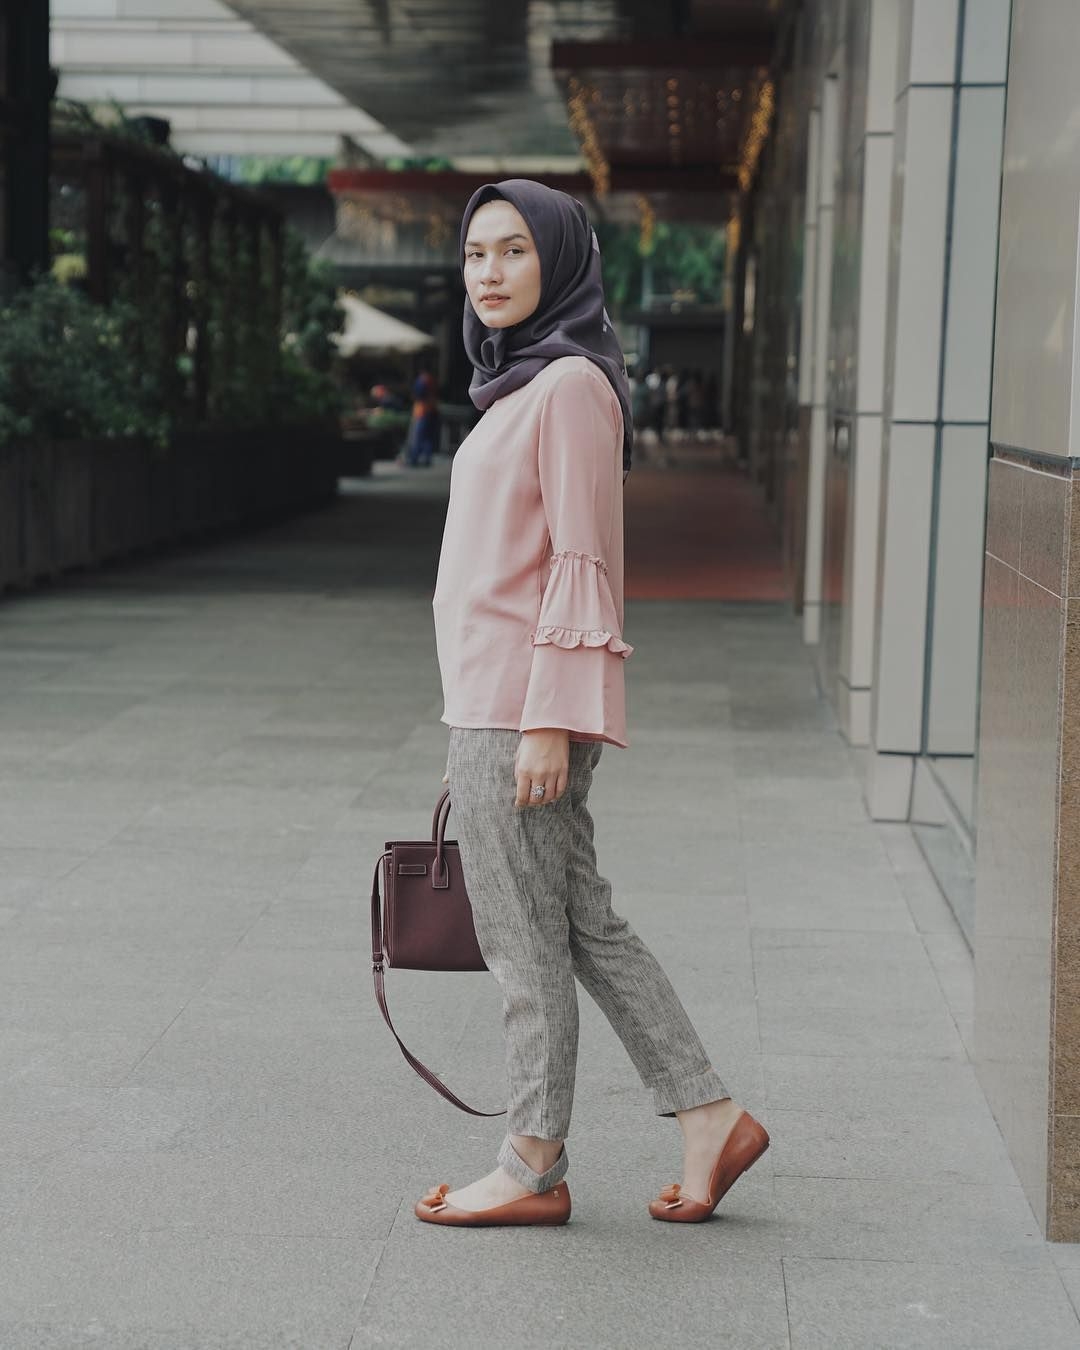 Style baju hijab simple untuk jalan jalan